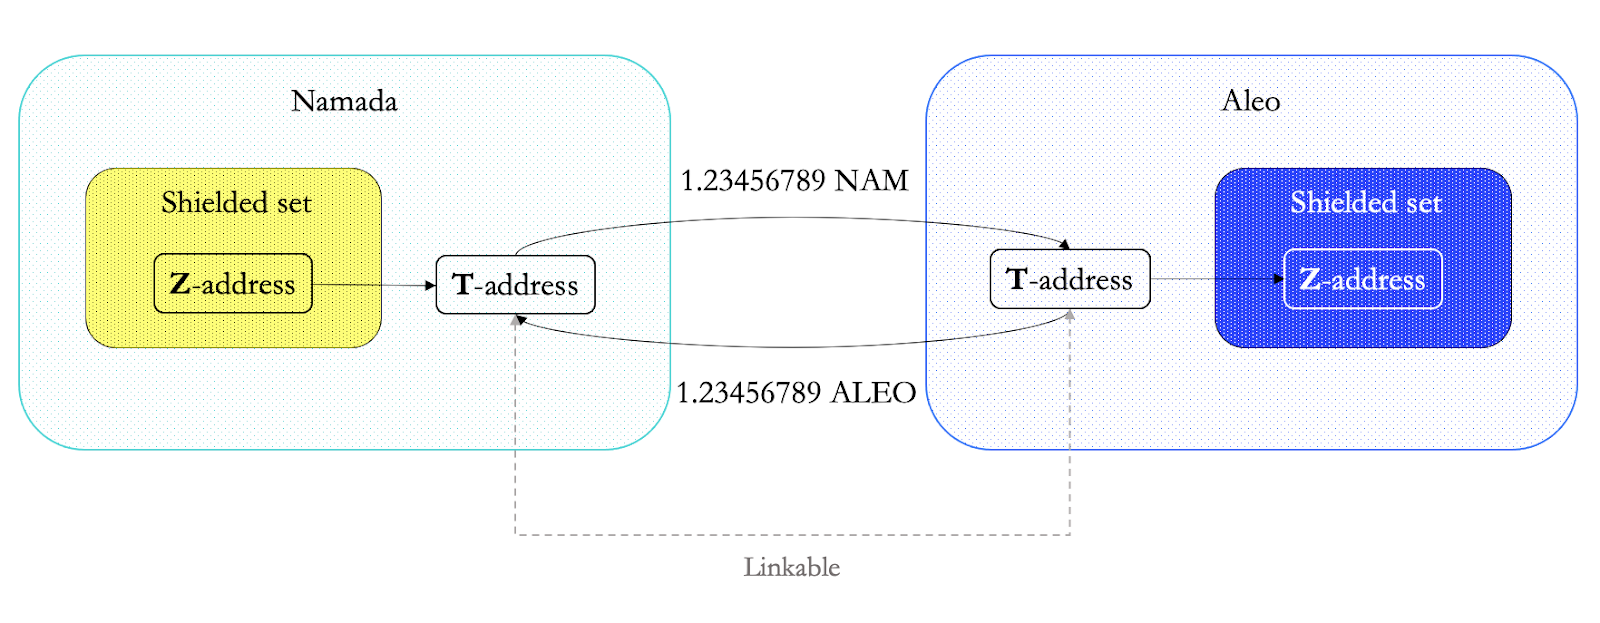 Figure 9: a cross-chain transaction between Namada and Aleo via a custom bridge